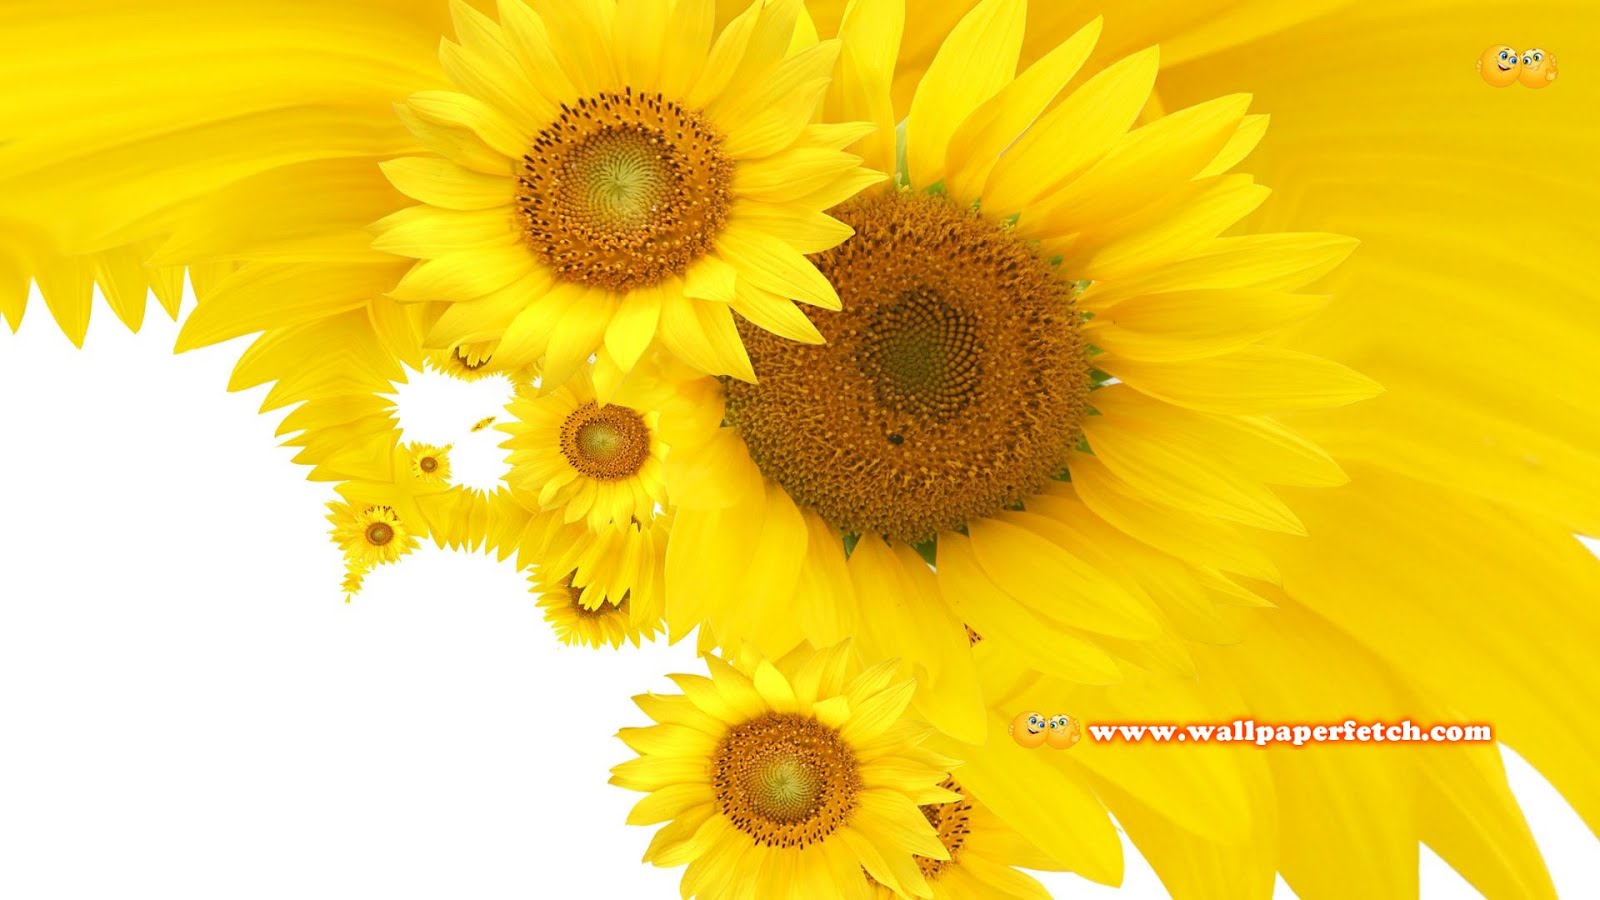 The Wallpapers UK: 40 Beautiful Sun Flower HD Wallpapers